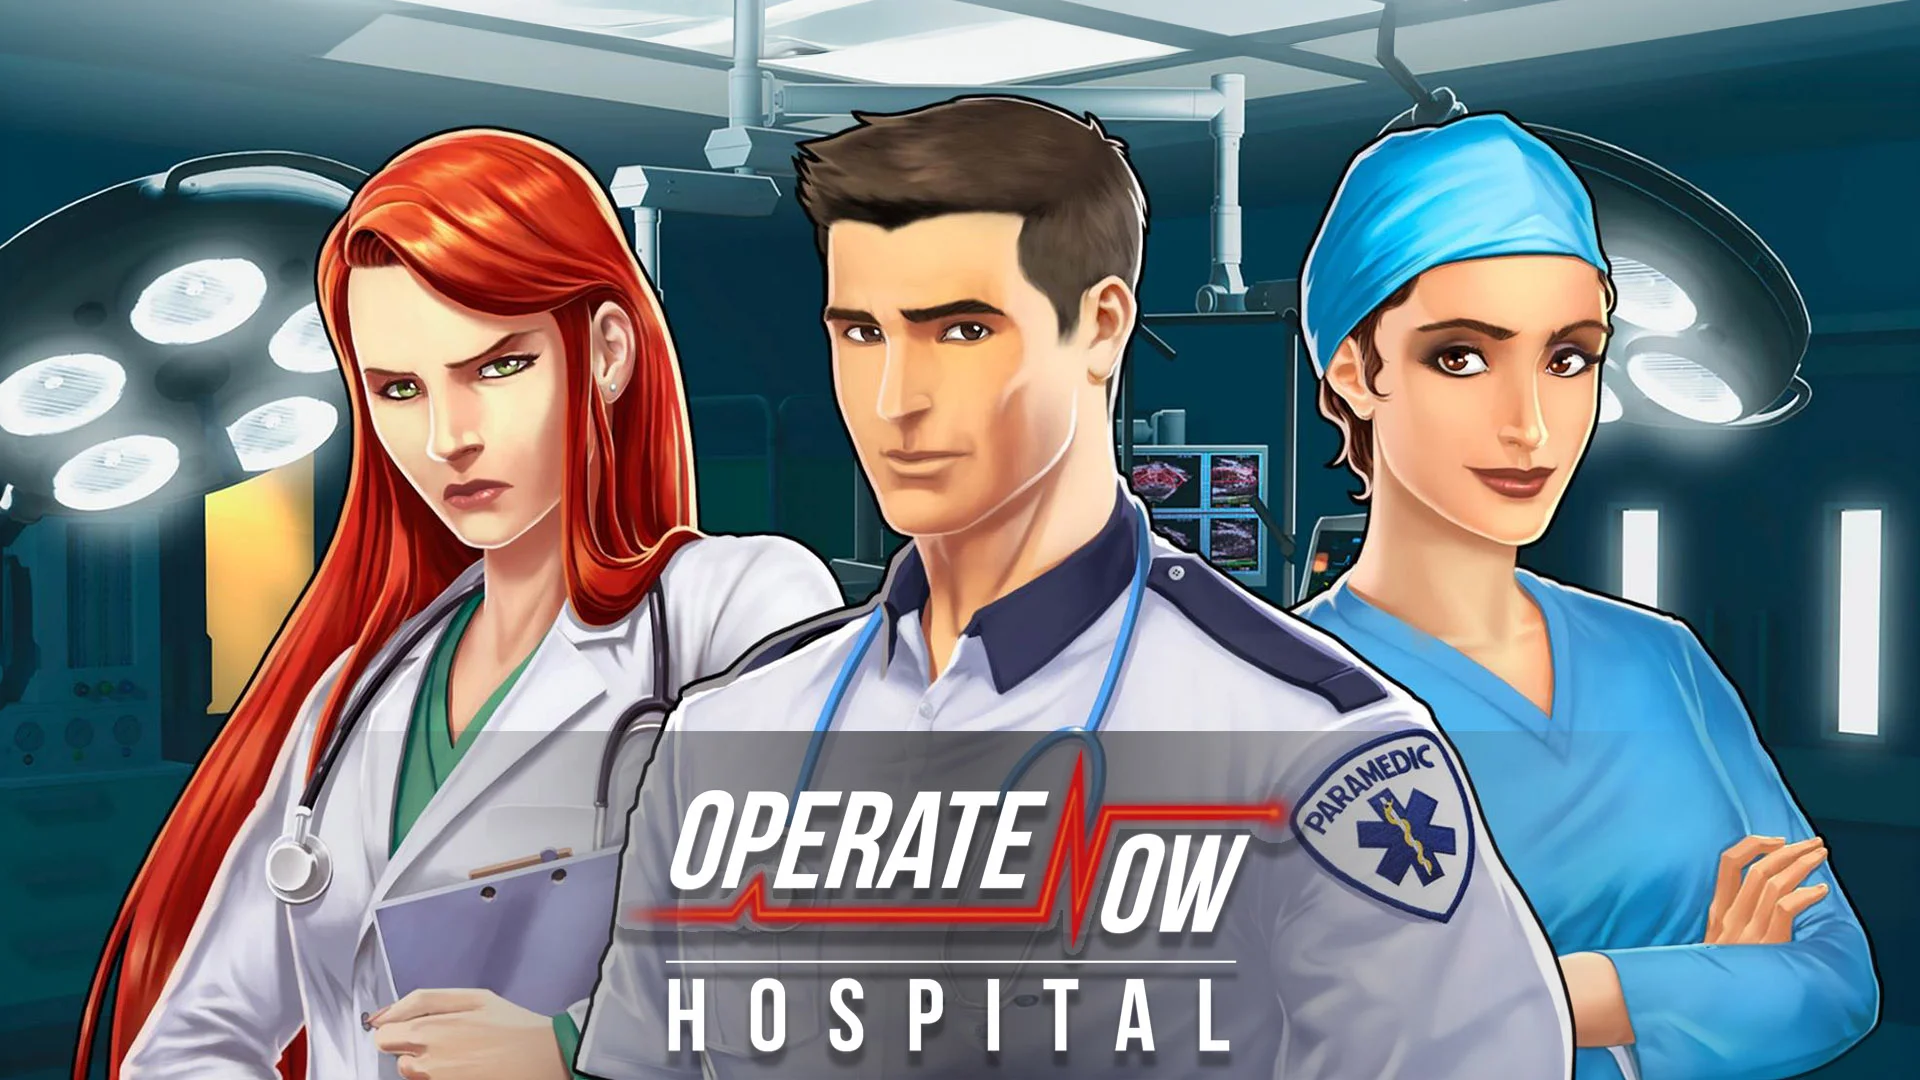 OperatenowHospital